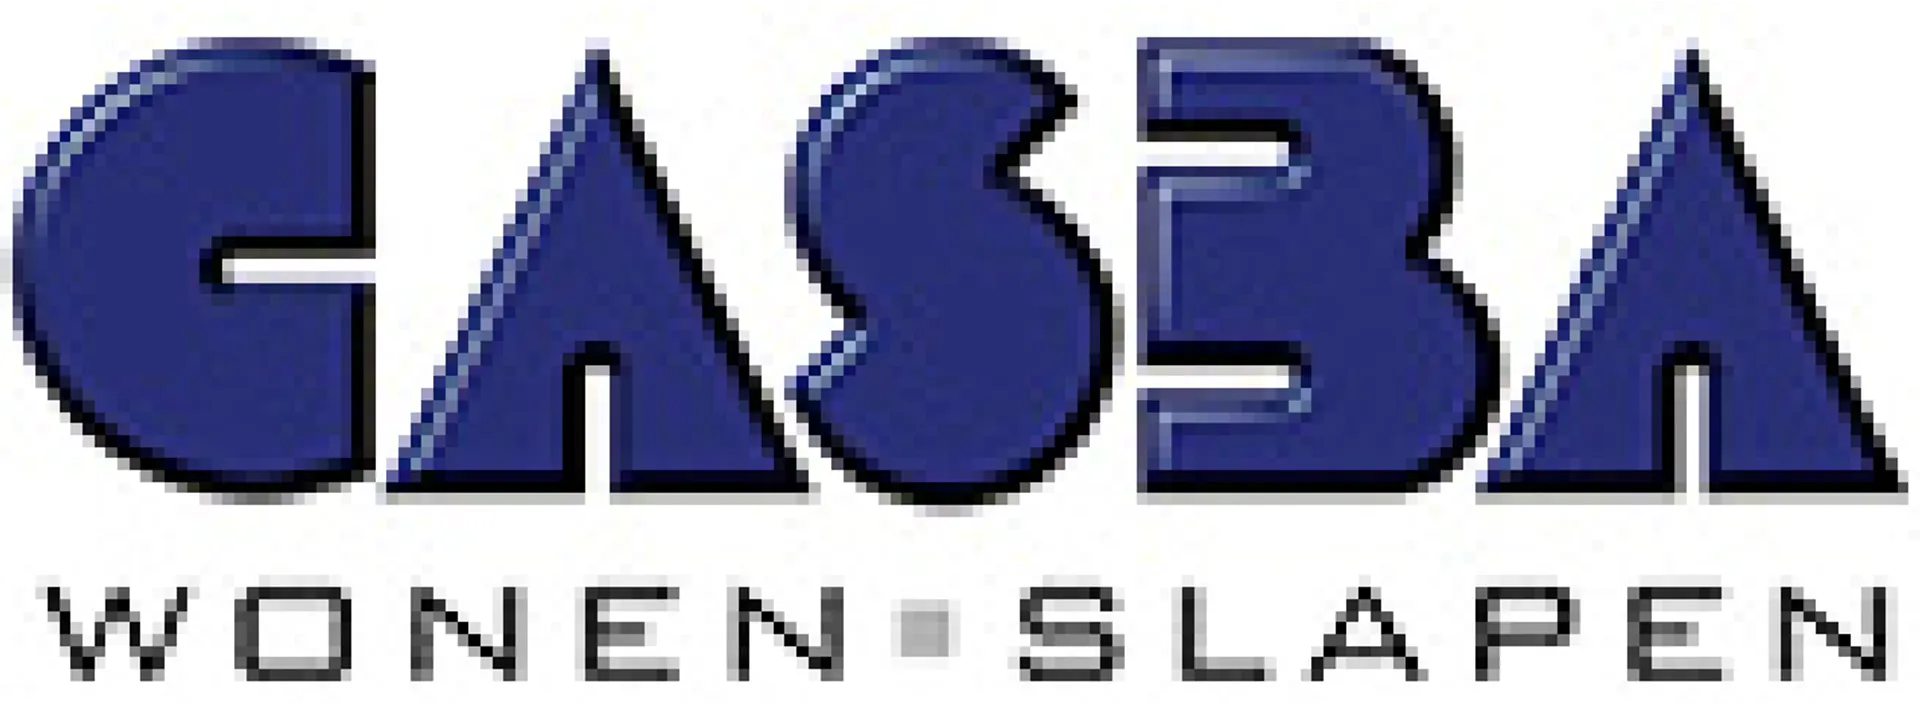 CASBA logo in de folder van deze week